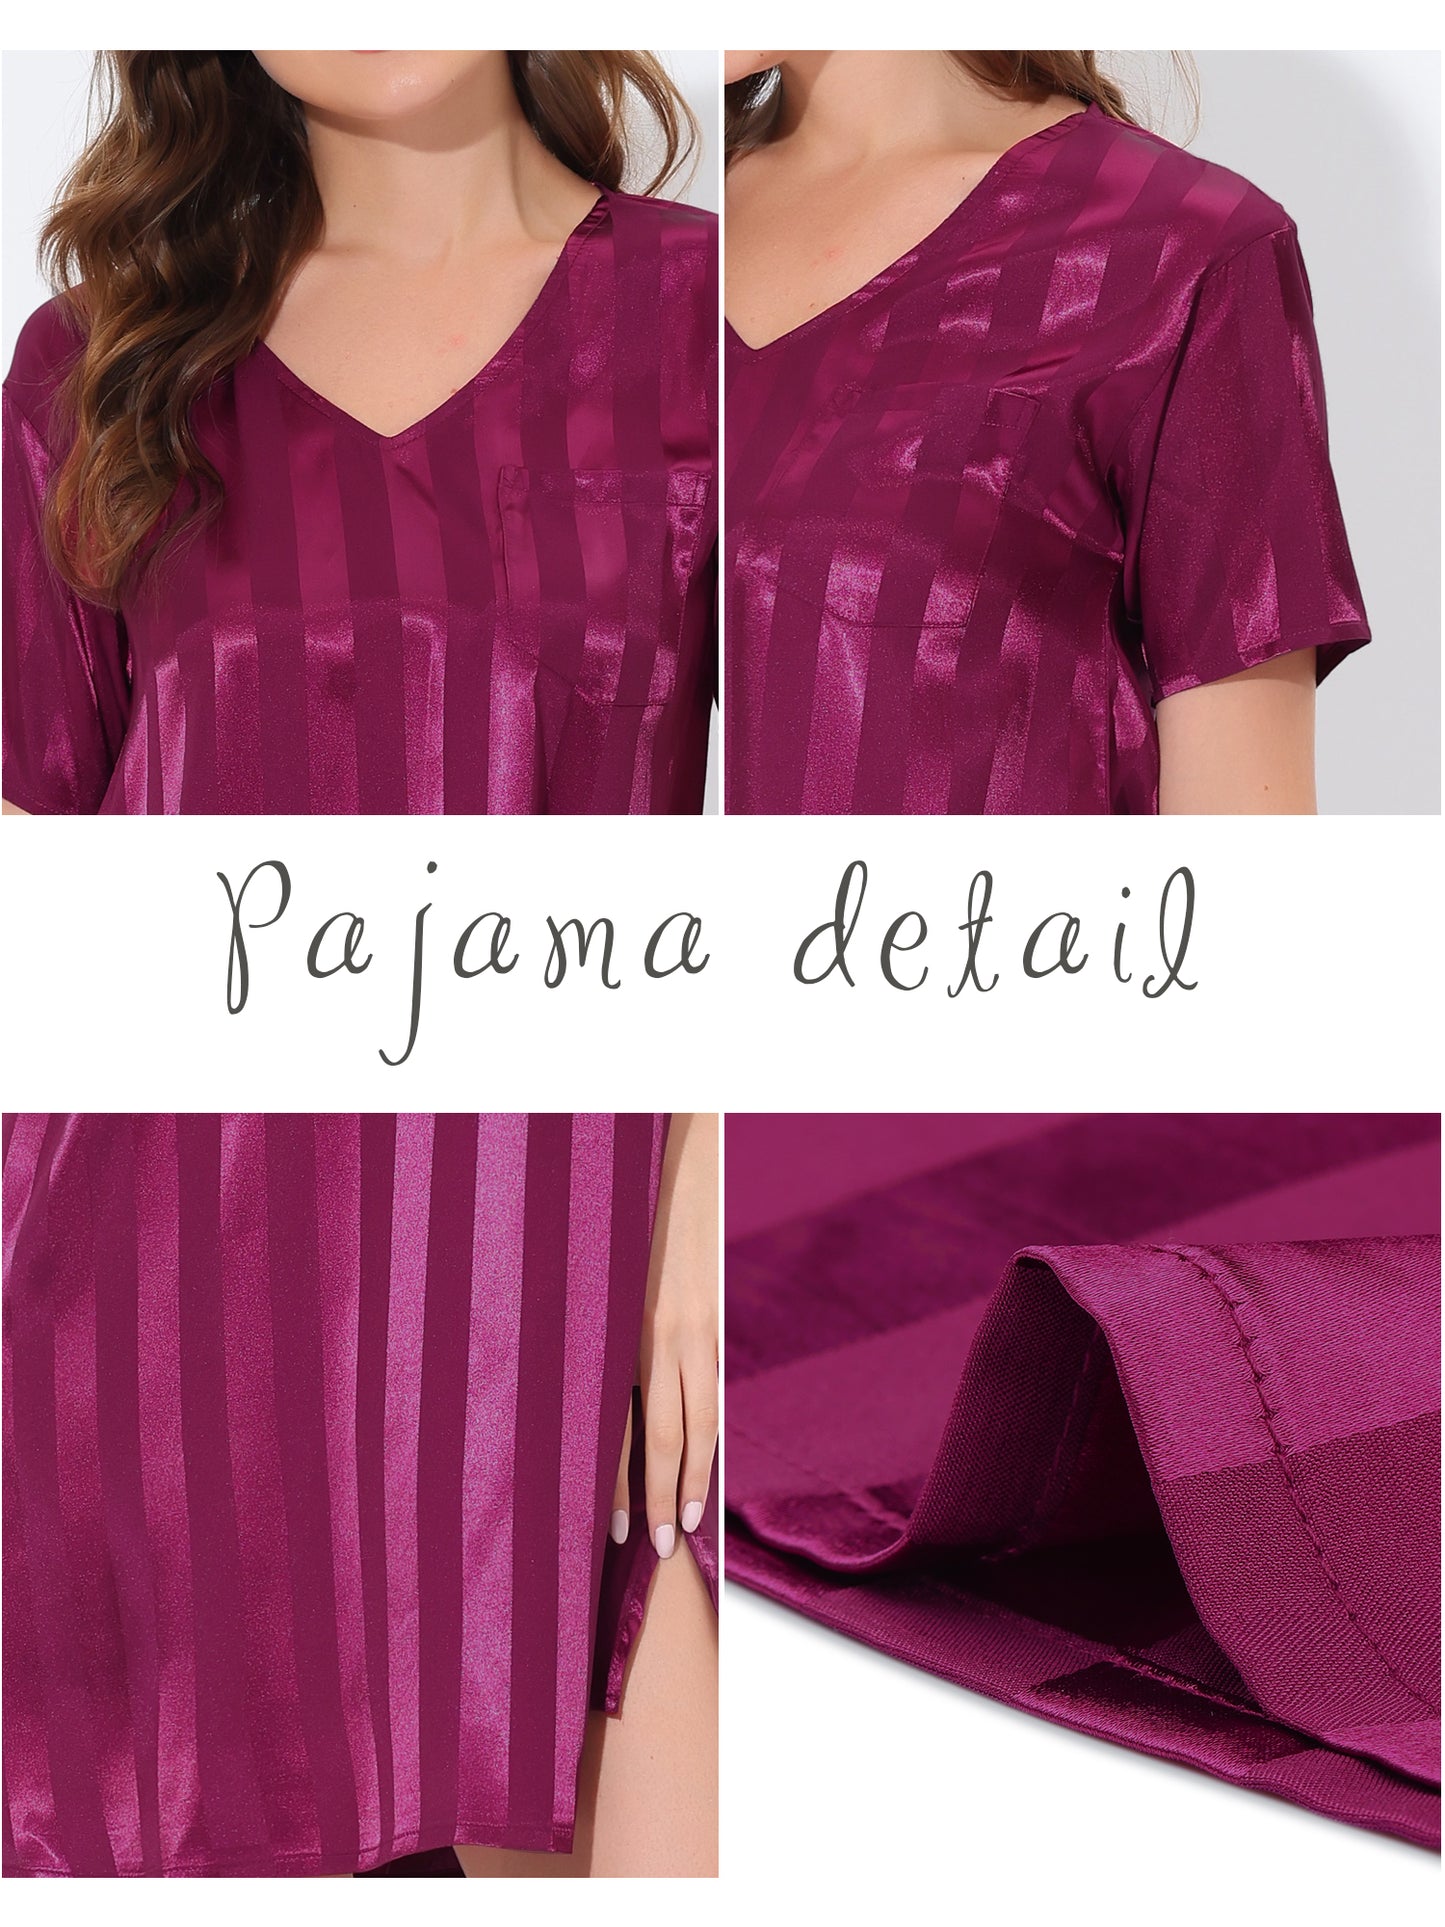 cheibear Pajamas Satin Dress Nightshirt Short Sleeves Lounge Sleepwear Nightgown Purple Red